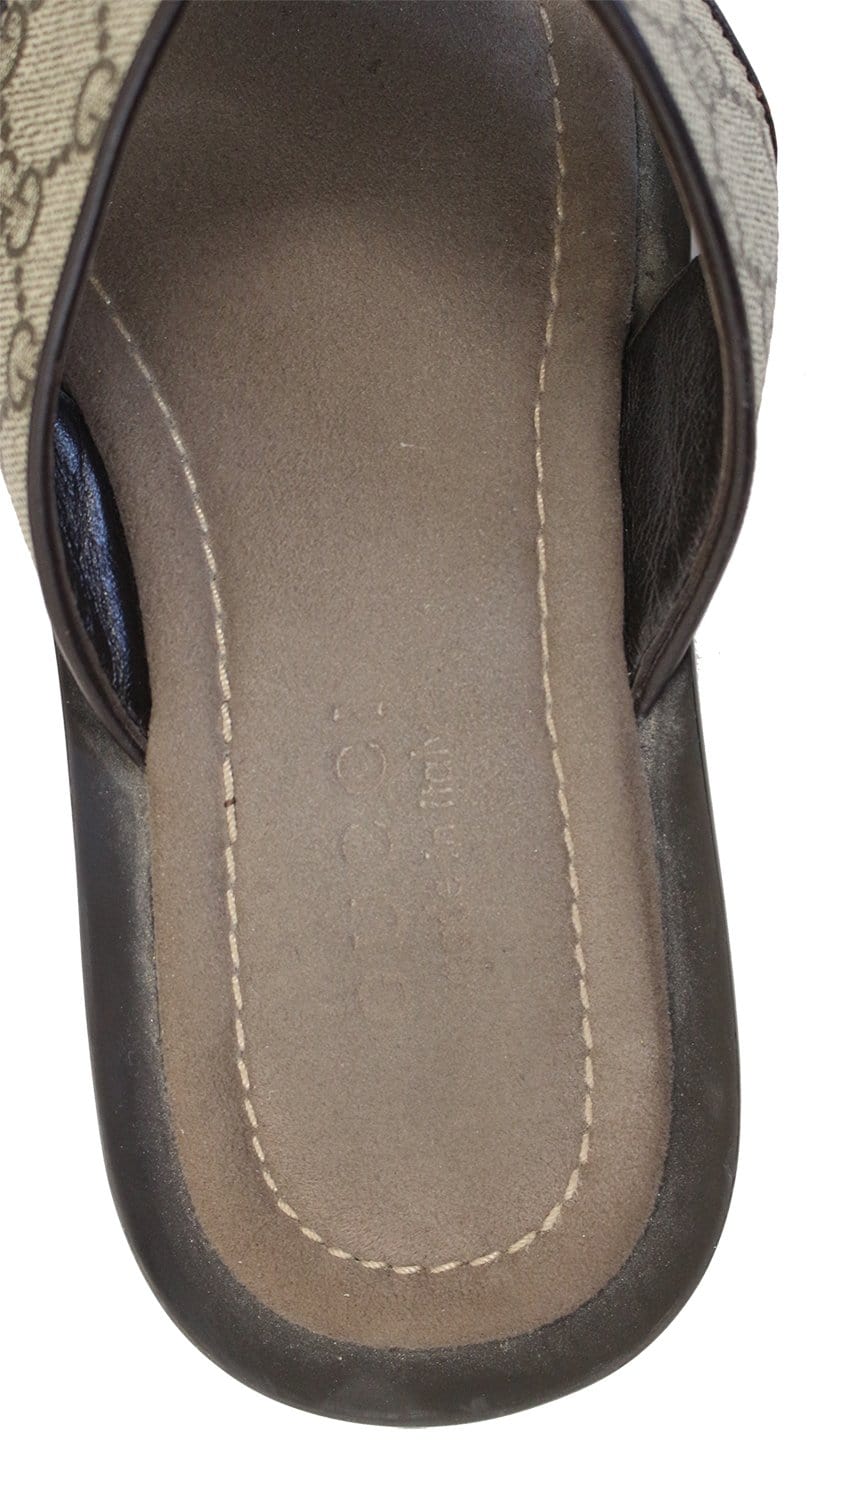 Gucci GG Supreme Canvas Sandals for Men